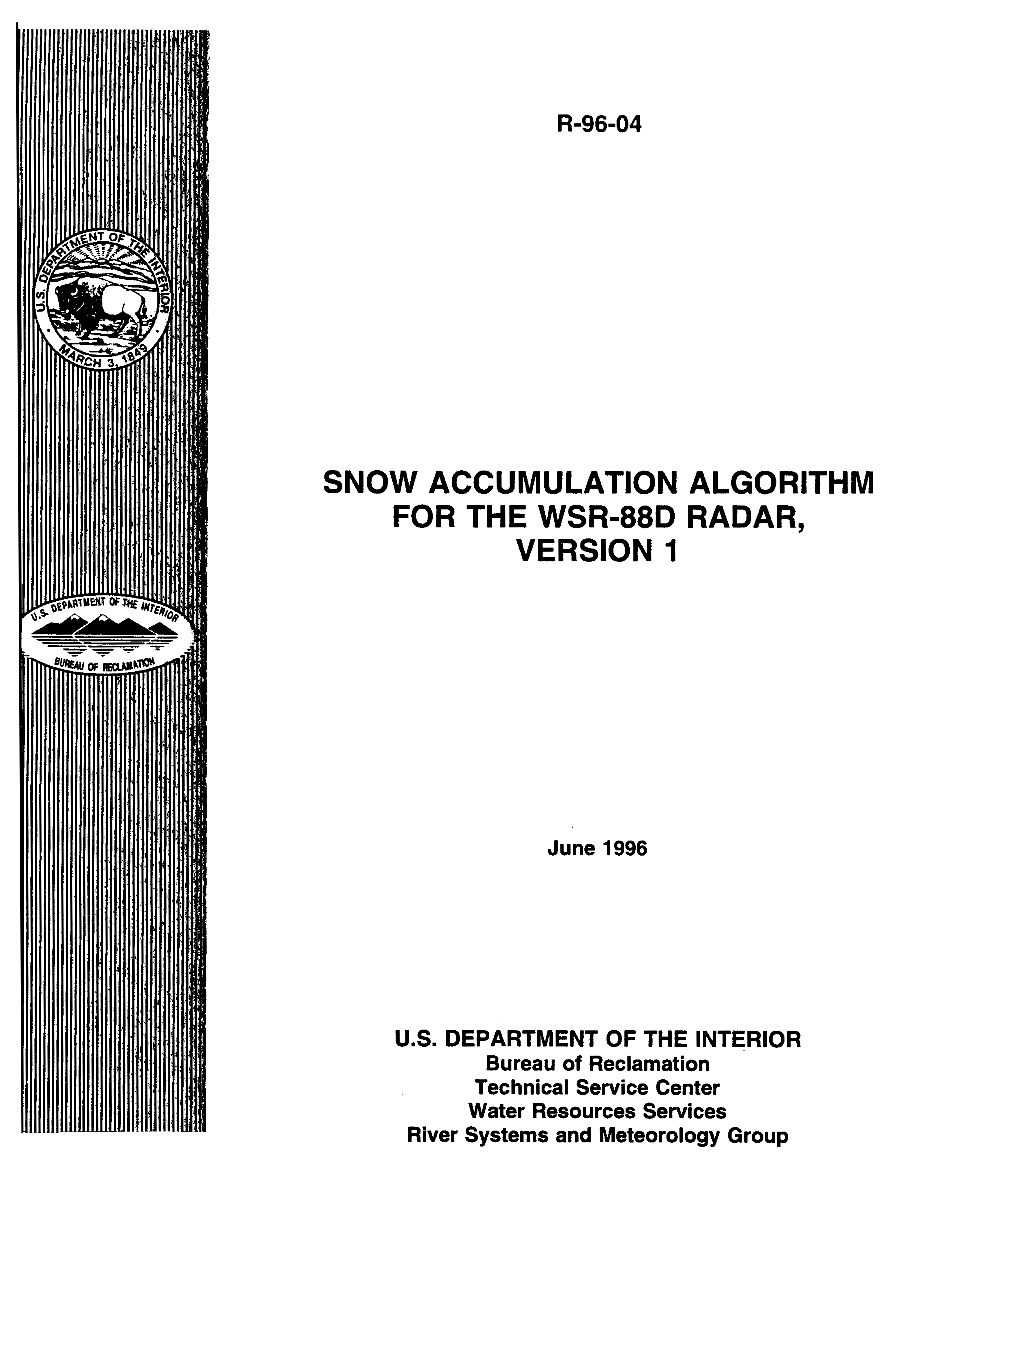 Snow Accumulation Algorithm for the Wsr-88D Radar, Version 1